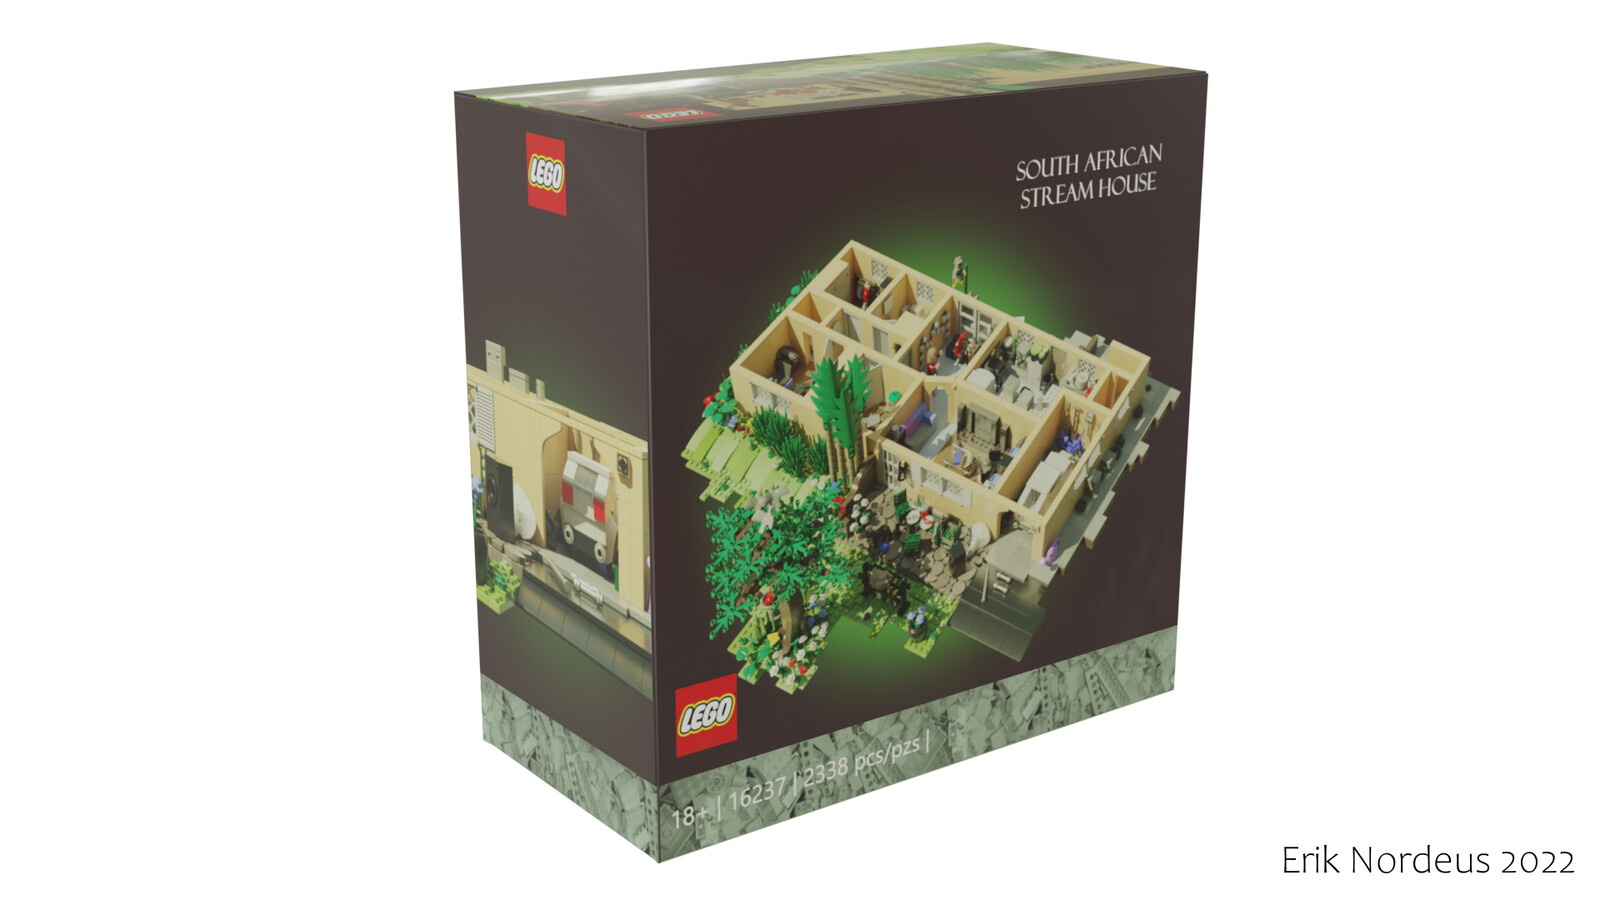 South Africa LEGO house set custom box art